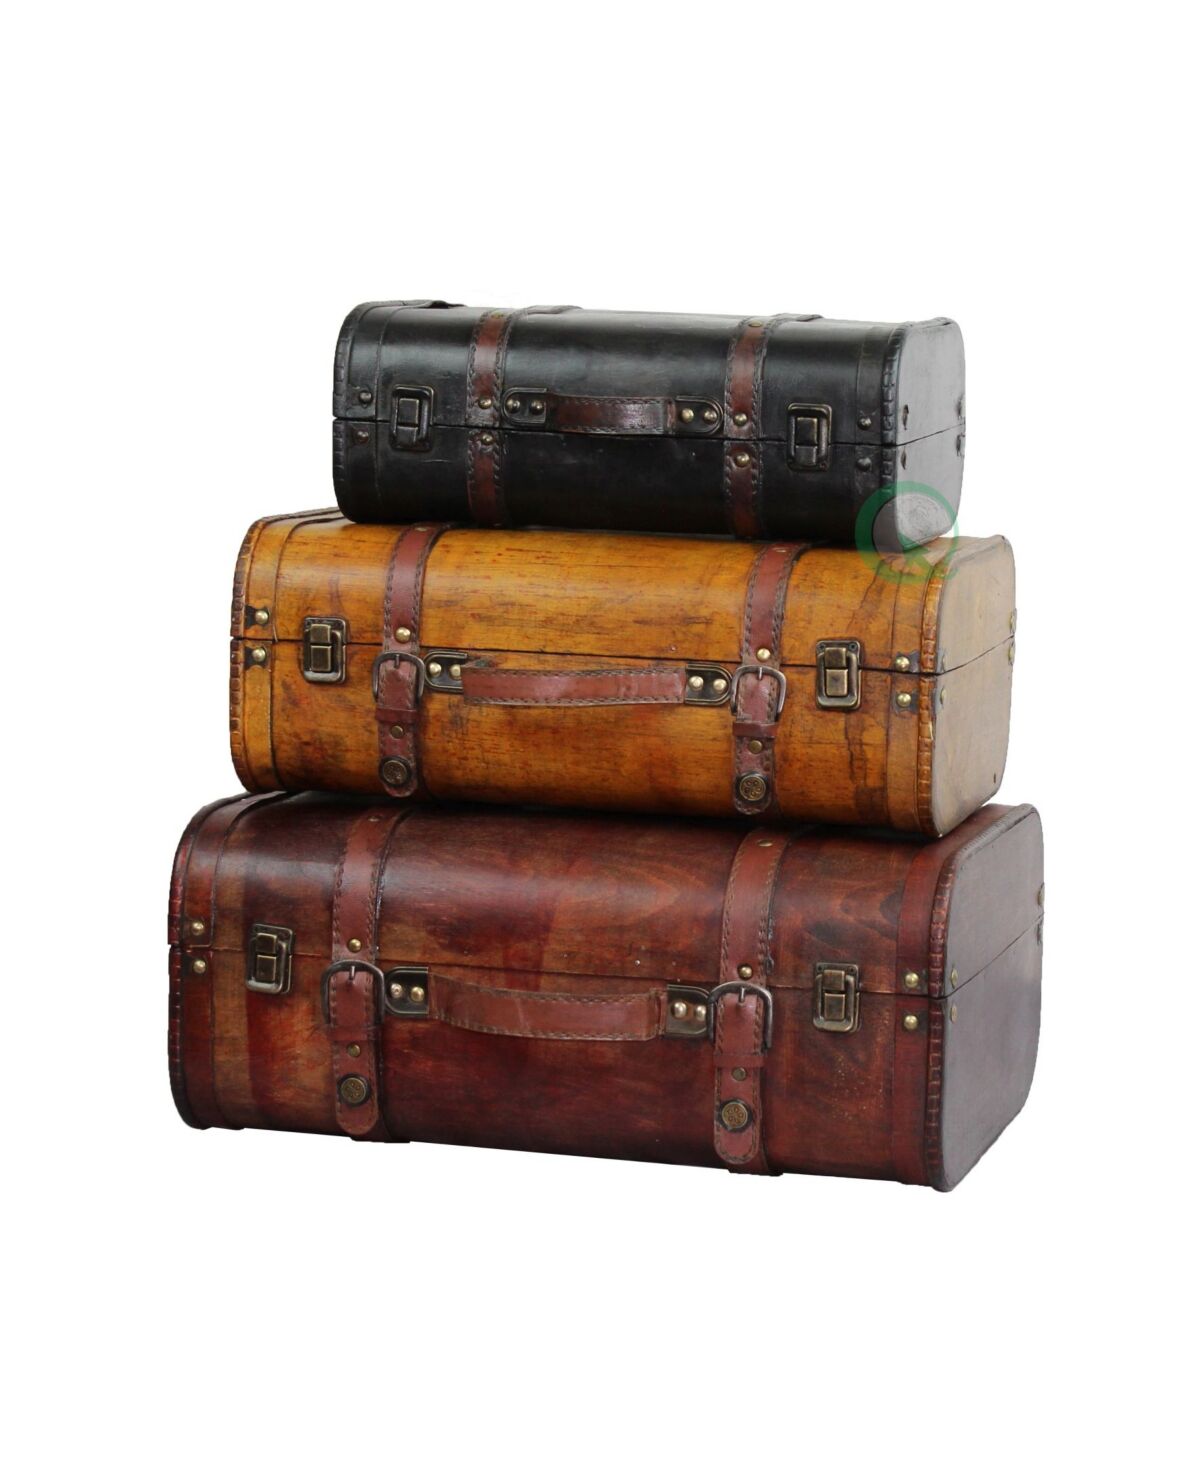 Vintiquewise Vintage-Like Style Luggage Suitcase, Trunk, Set of 3 - Brown